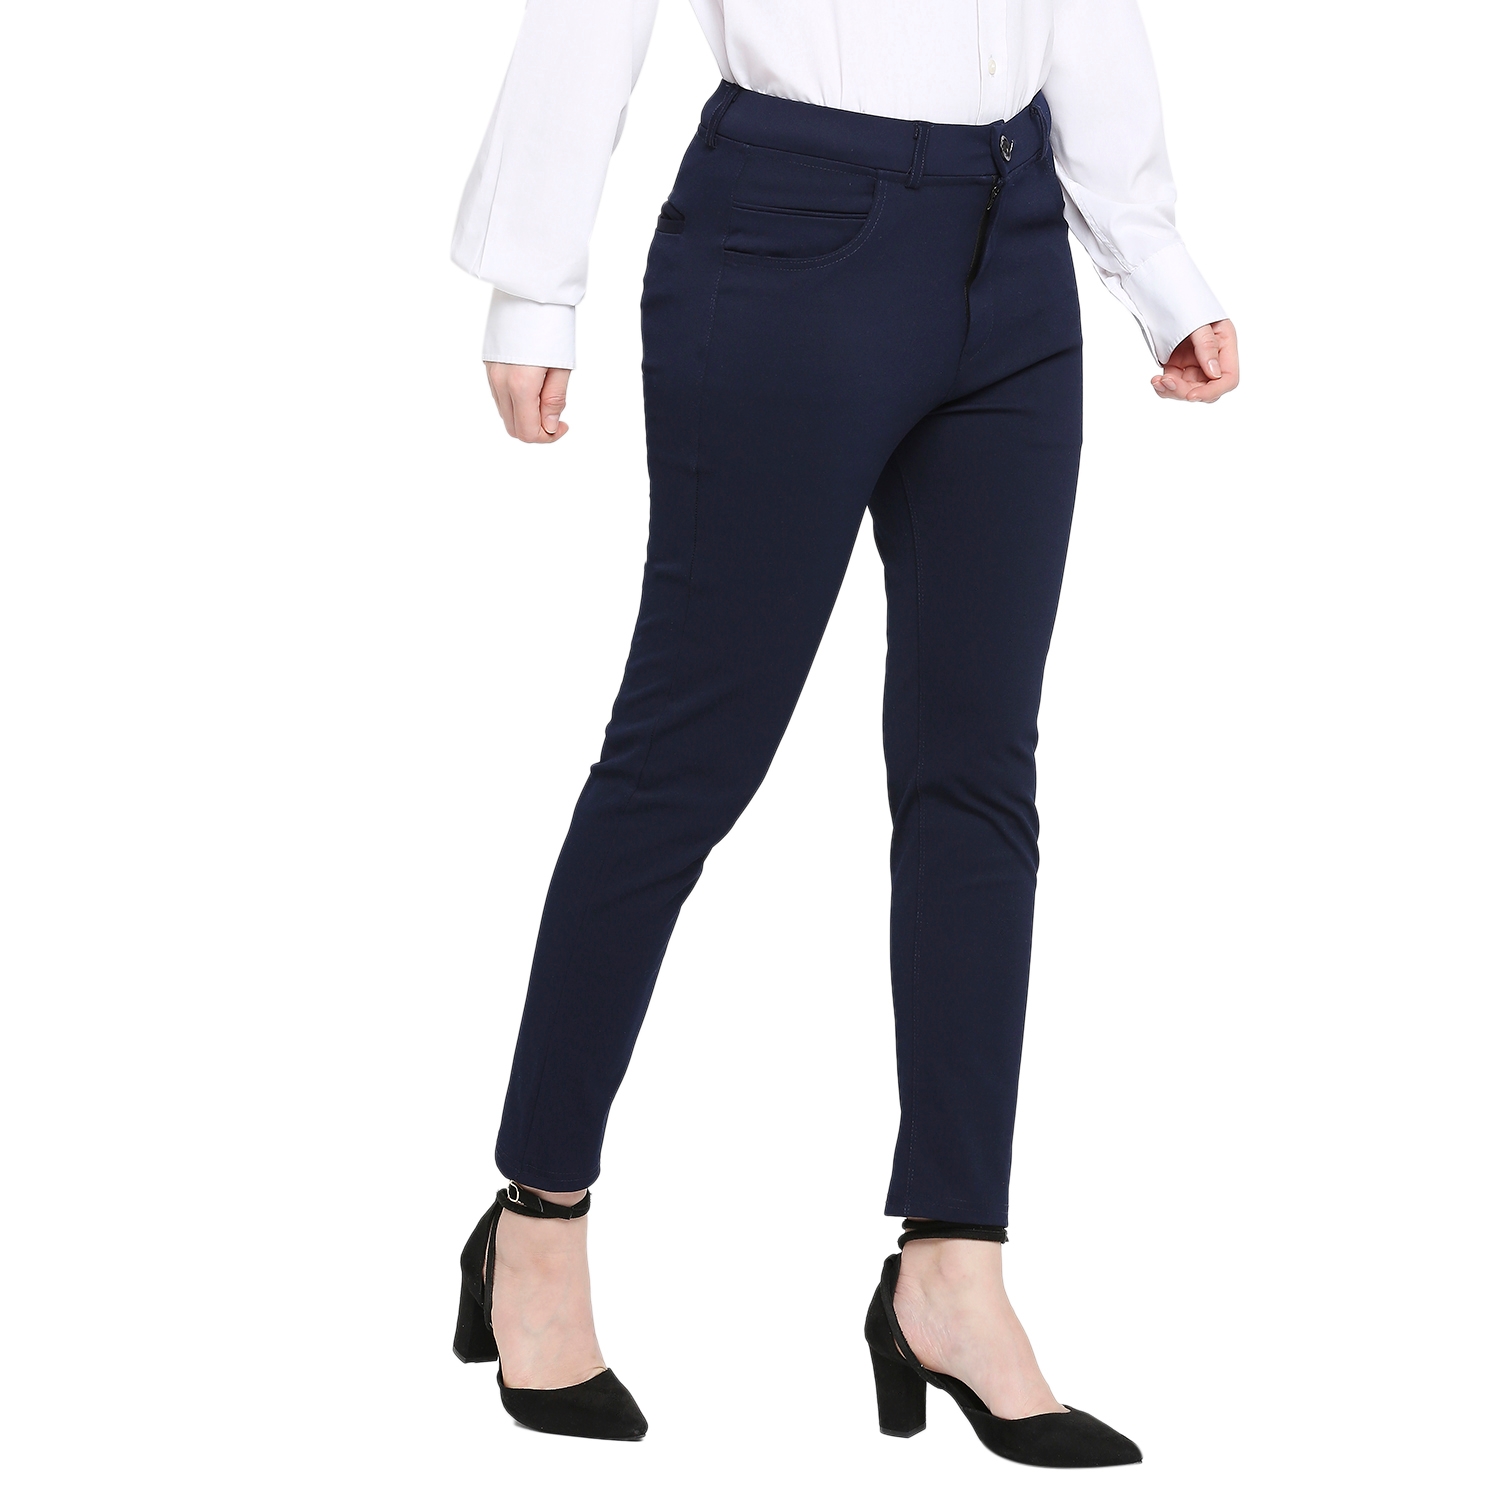 Suit Pant Length & Types of Pant Breaks